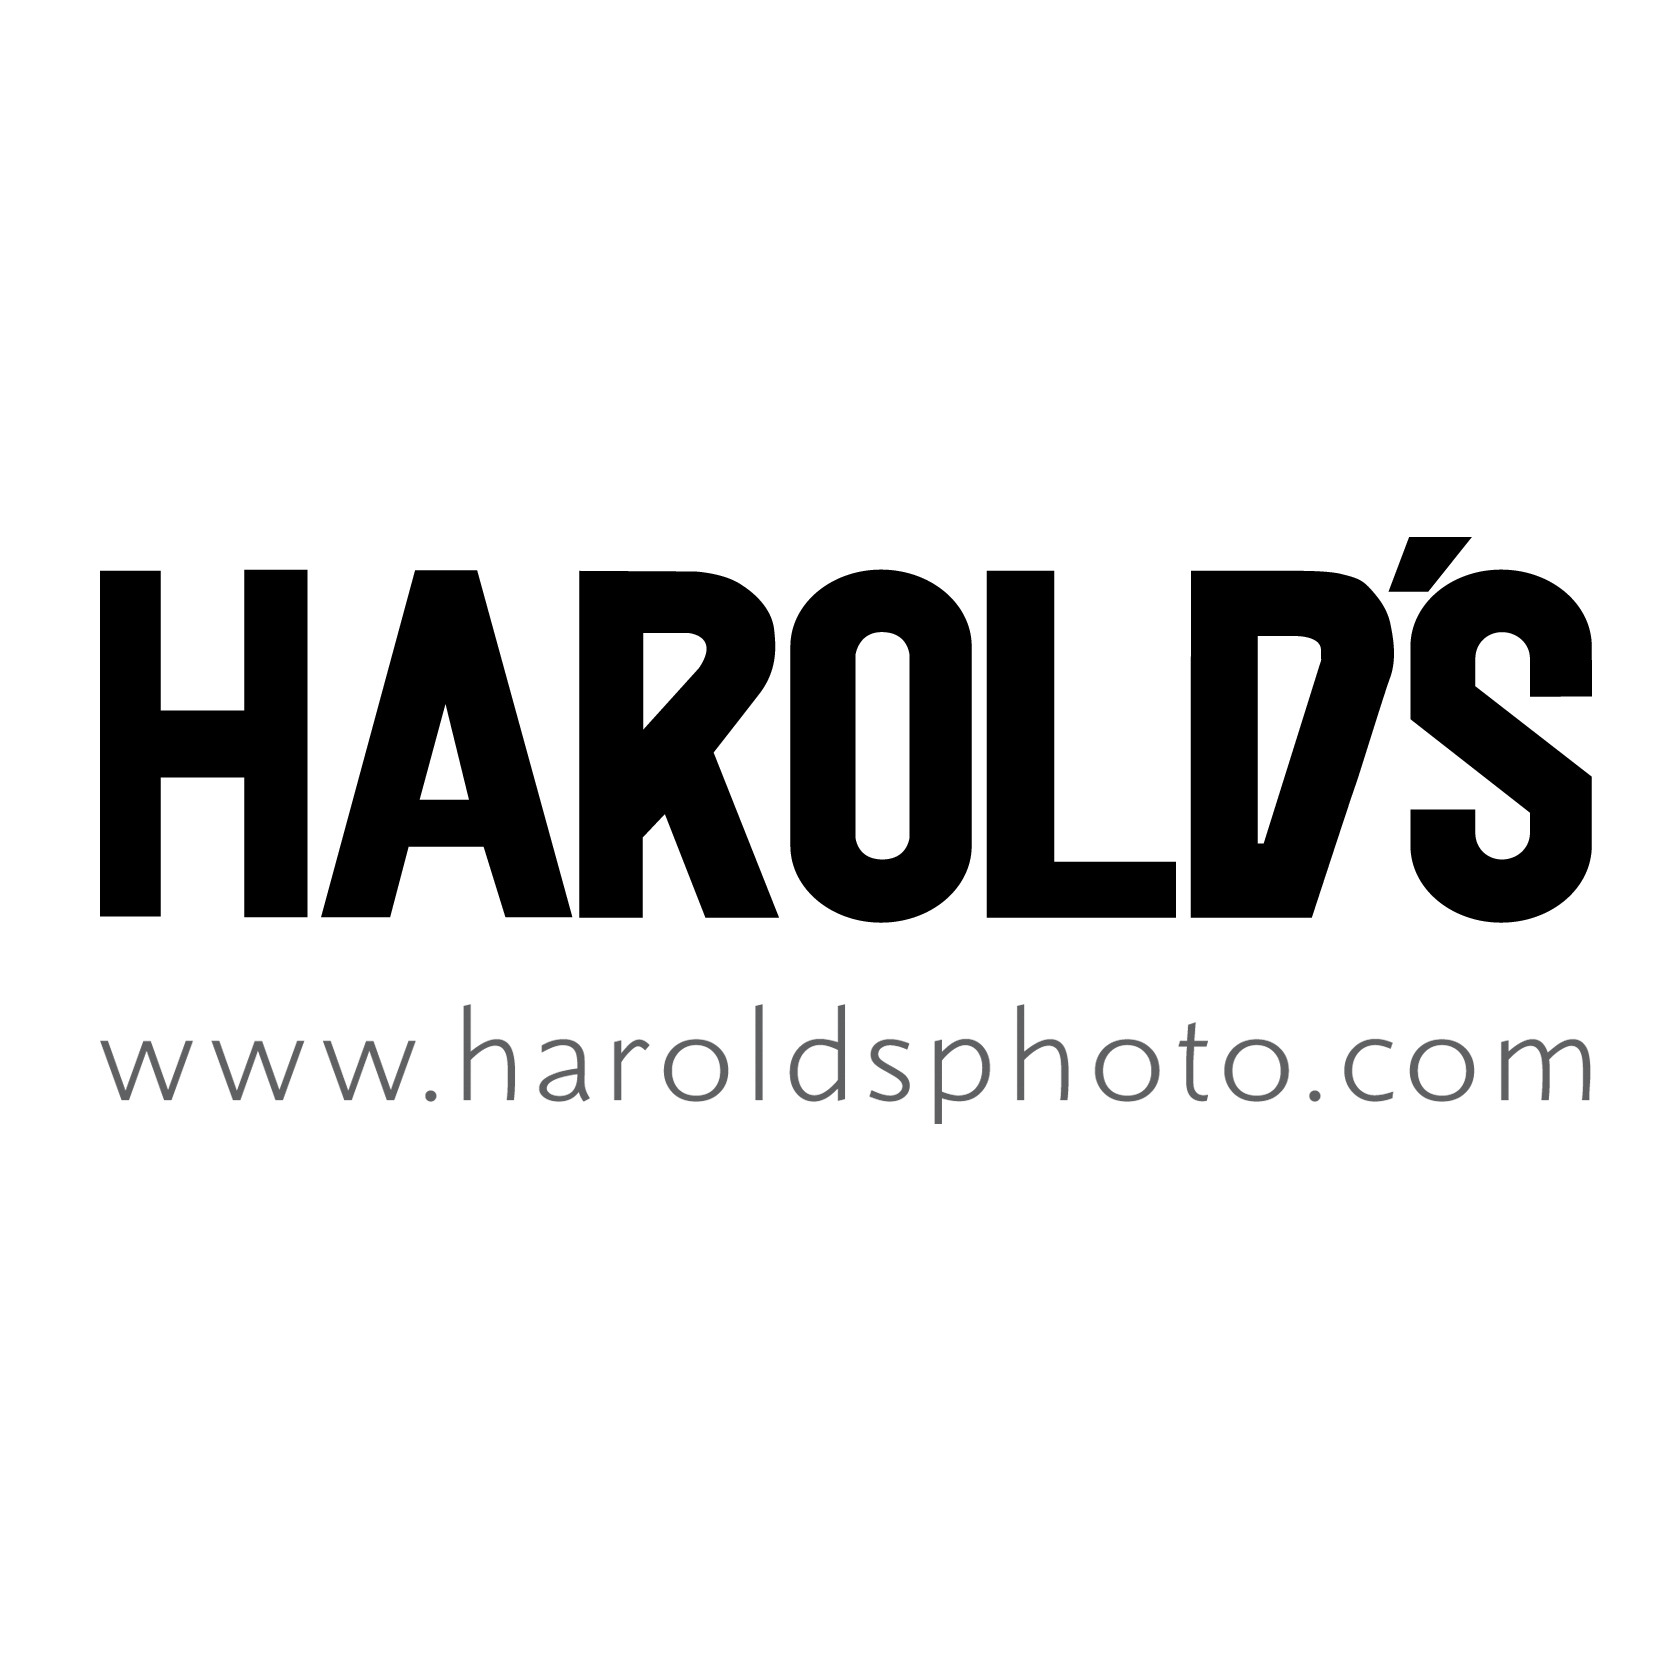 Harold's Photo - Sioux Falls, SD 57105 - (605)336-2833 | ShowMeLocal.com